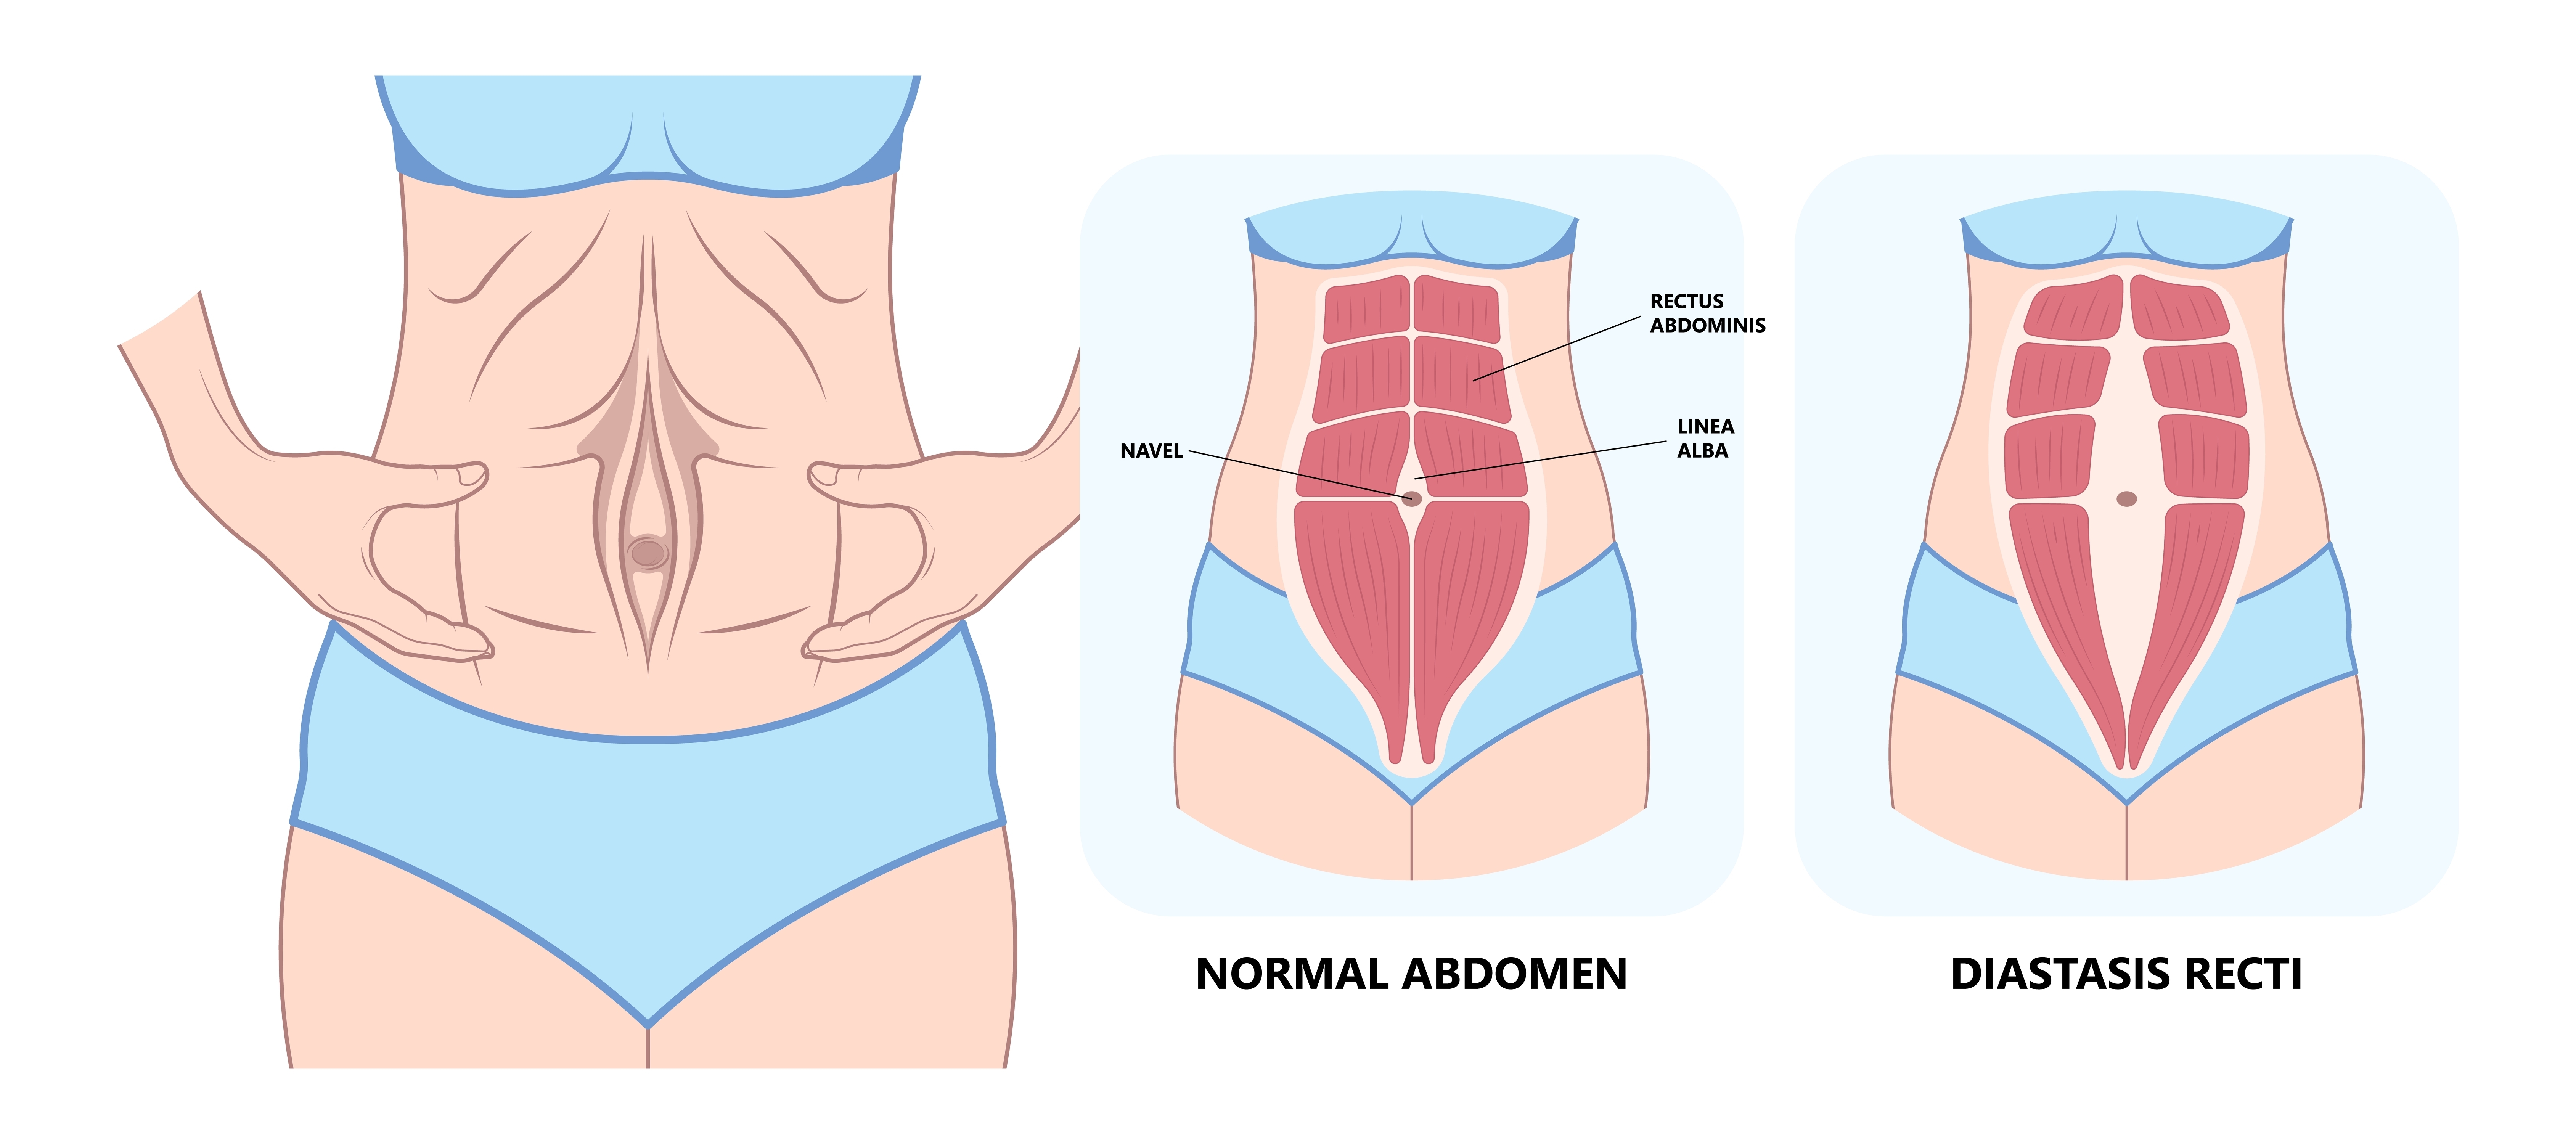 normal abdomen and diastasis recti